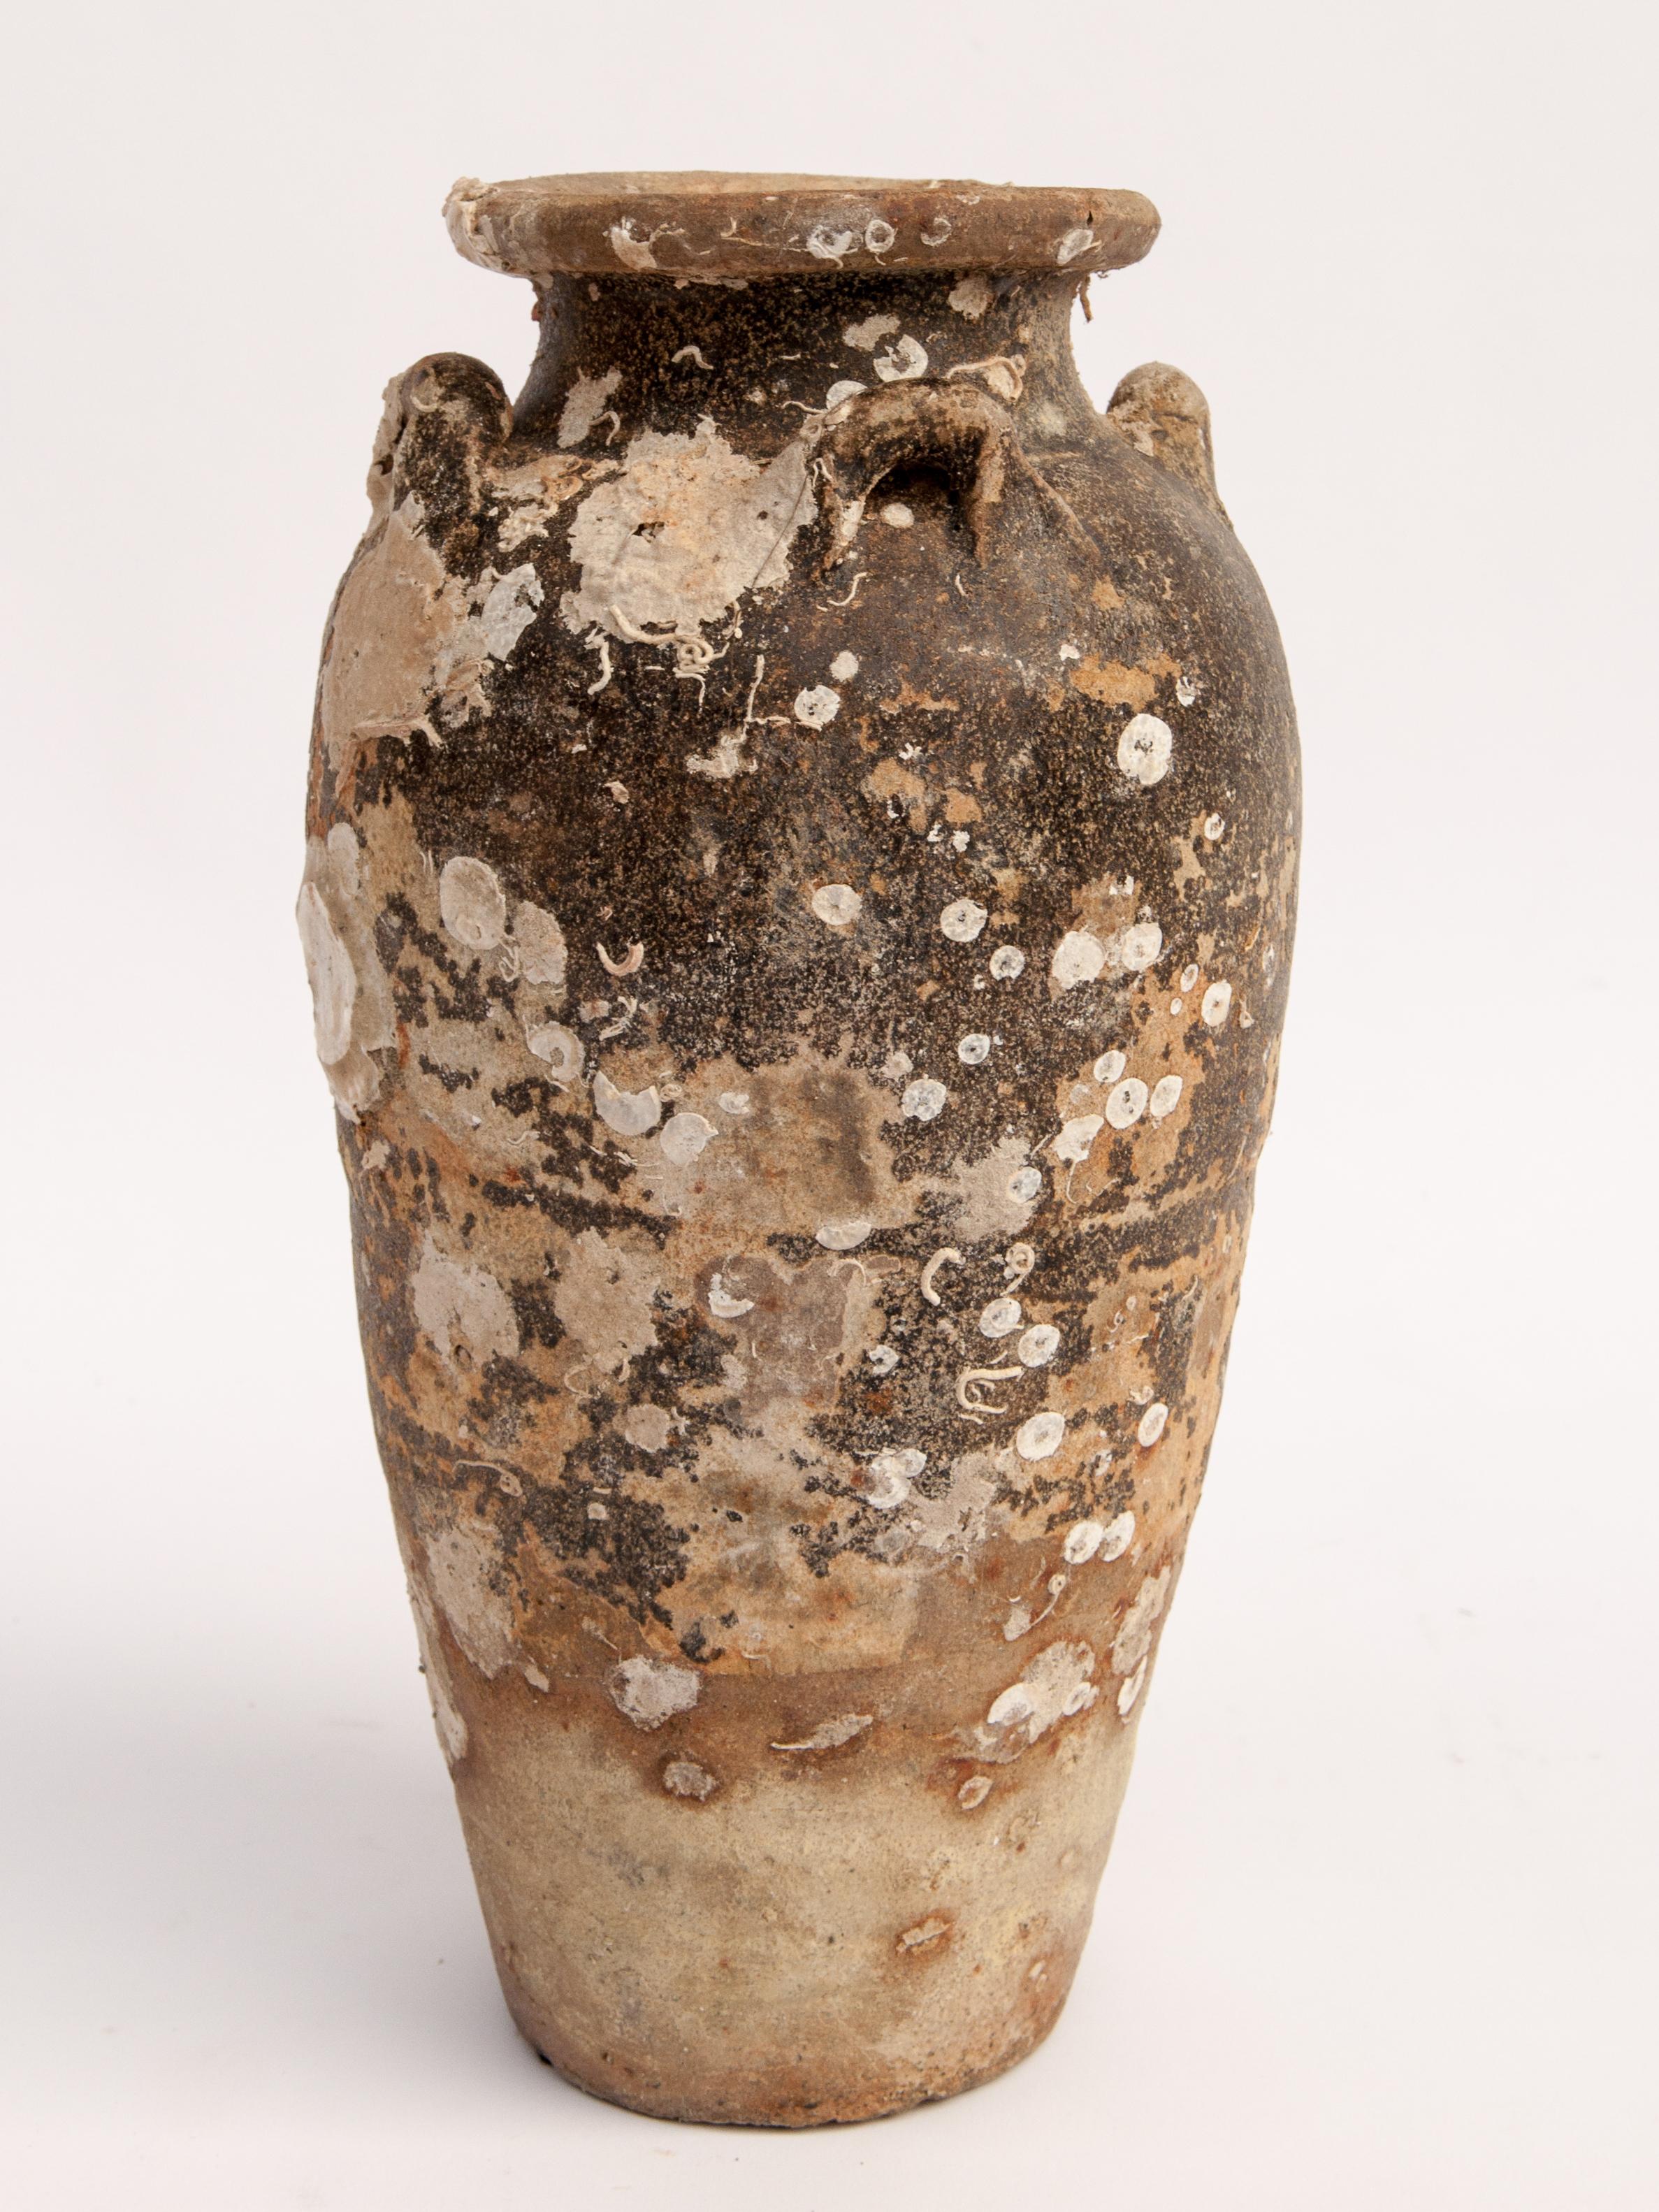 Antique Sawankhalok Jar with Encrustations. Sawankhalok, Thailand, 15th century.
This jar originates from the kilns of central Thailand centered around the area of Si Sachanalai dating to the Sukhothai period. Sawankhalok ceramics were widely